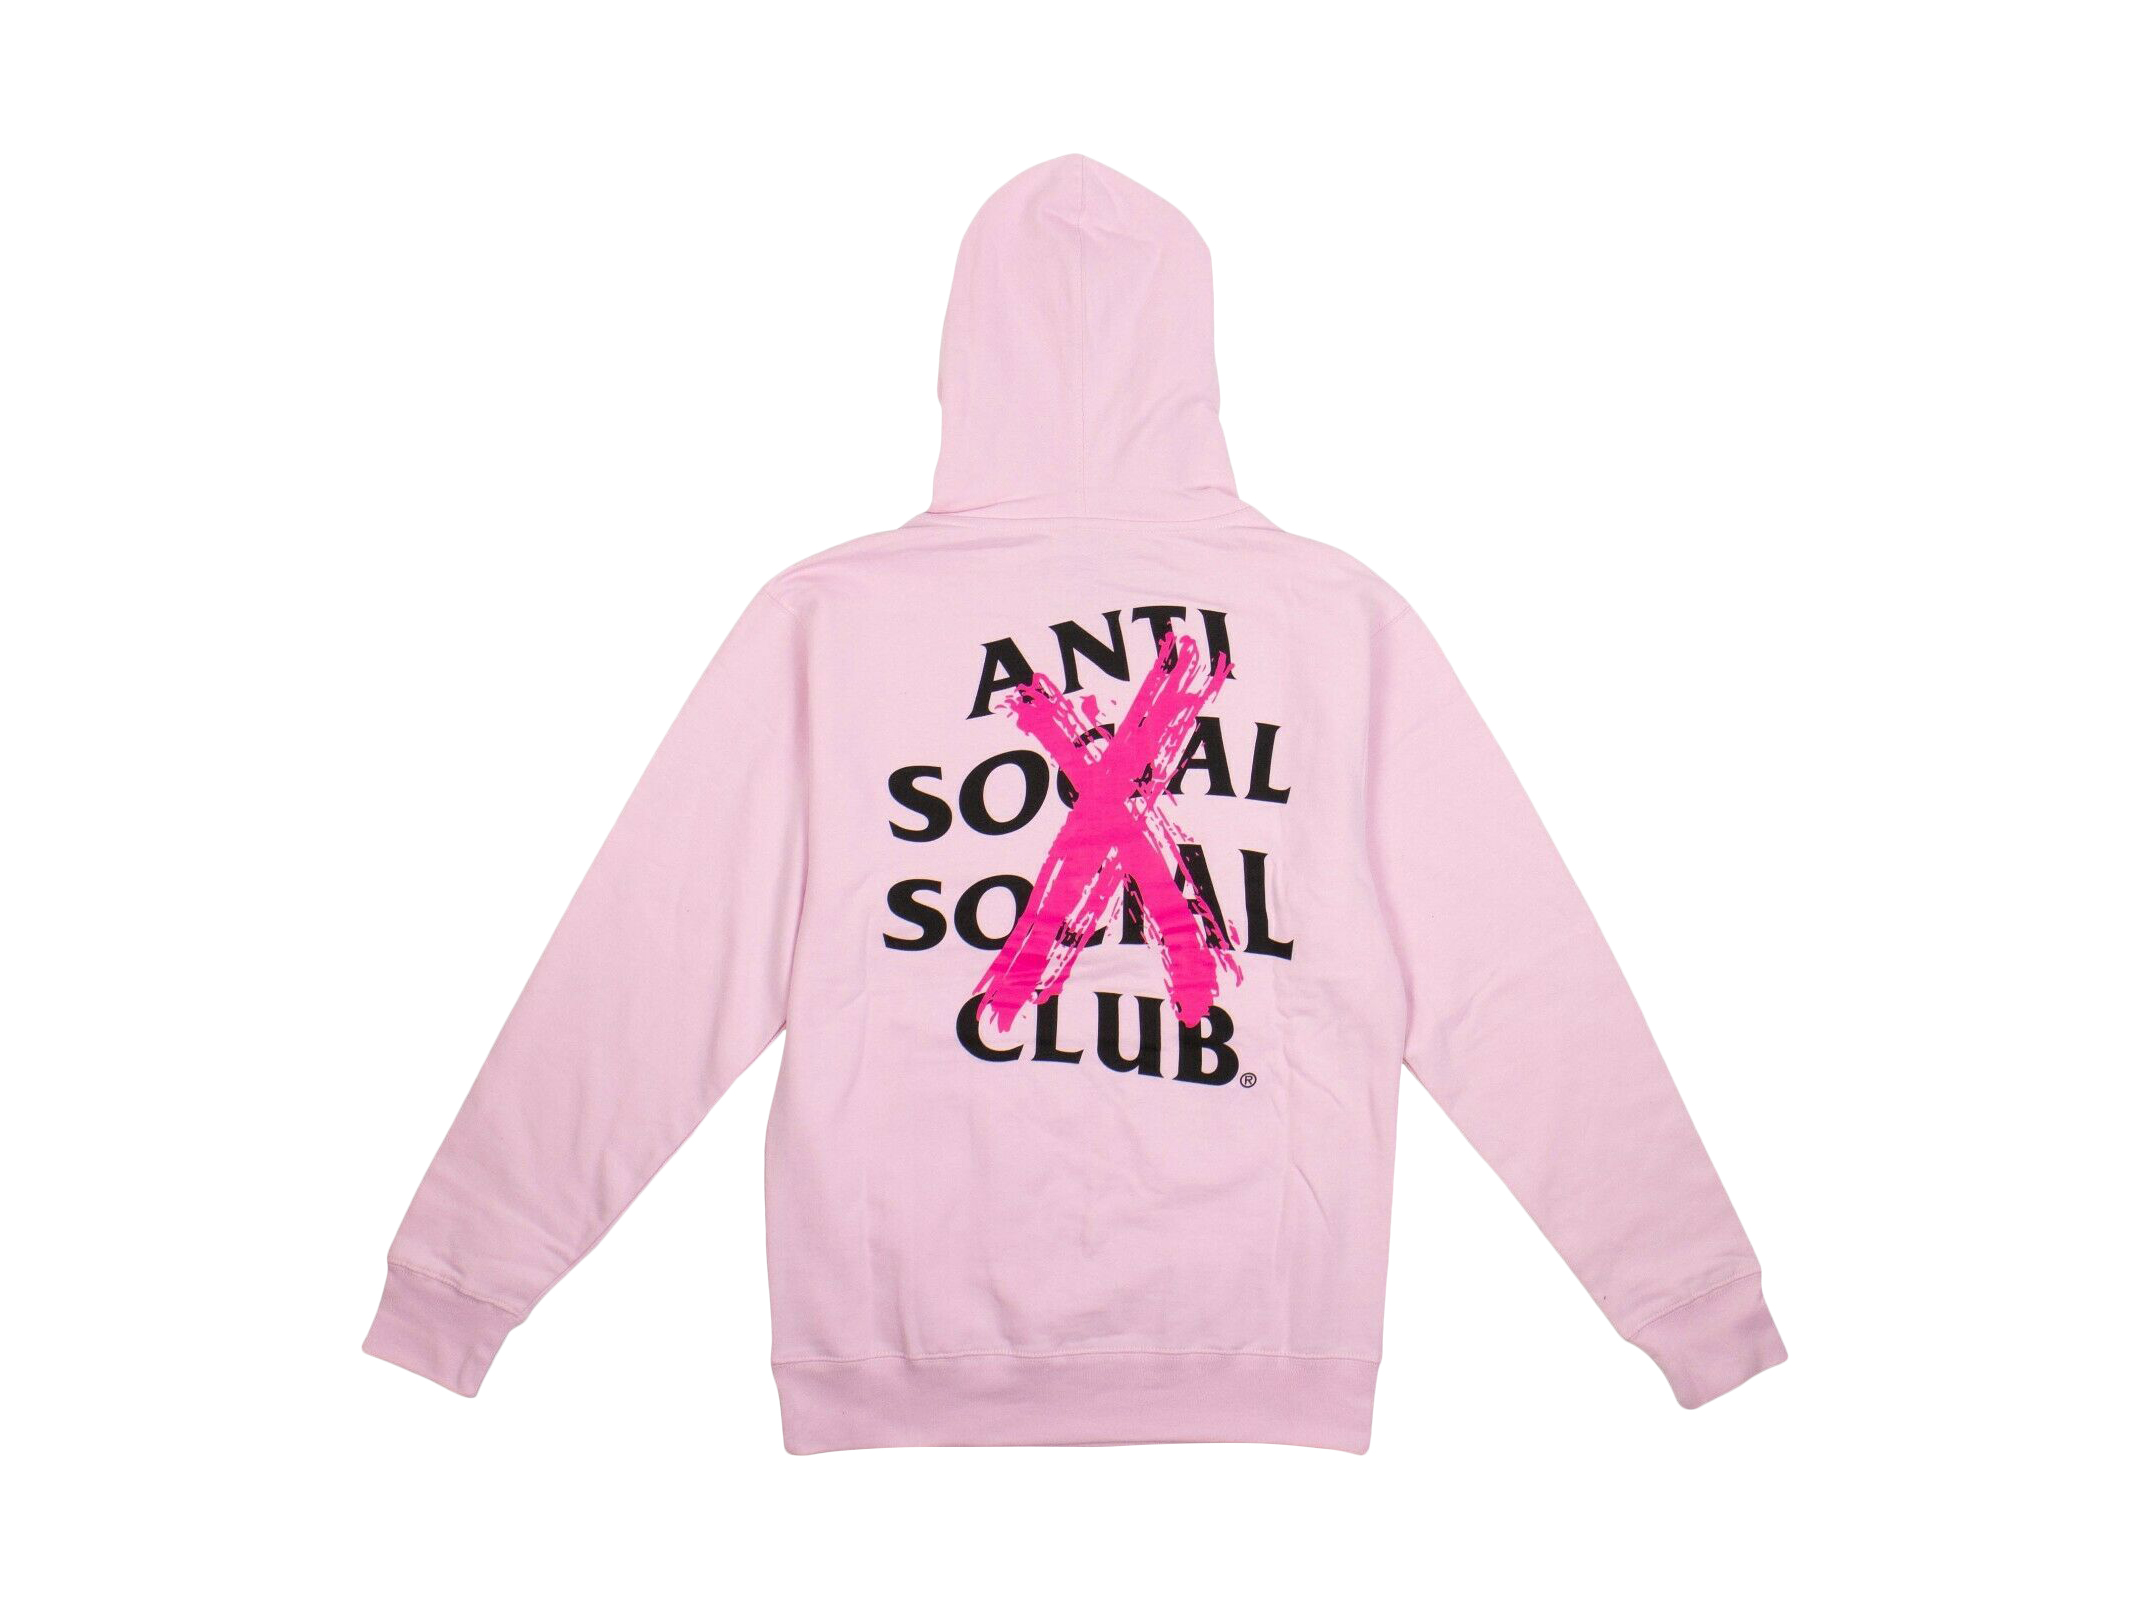 Anti Social Social Club Cancelled Hoodie Pink